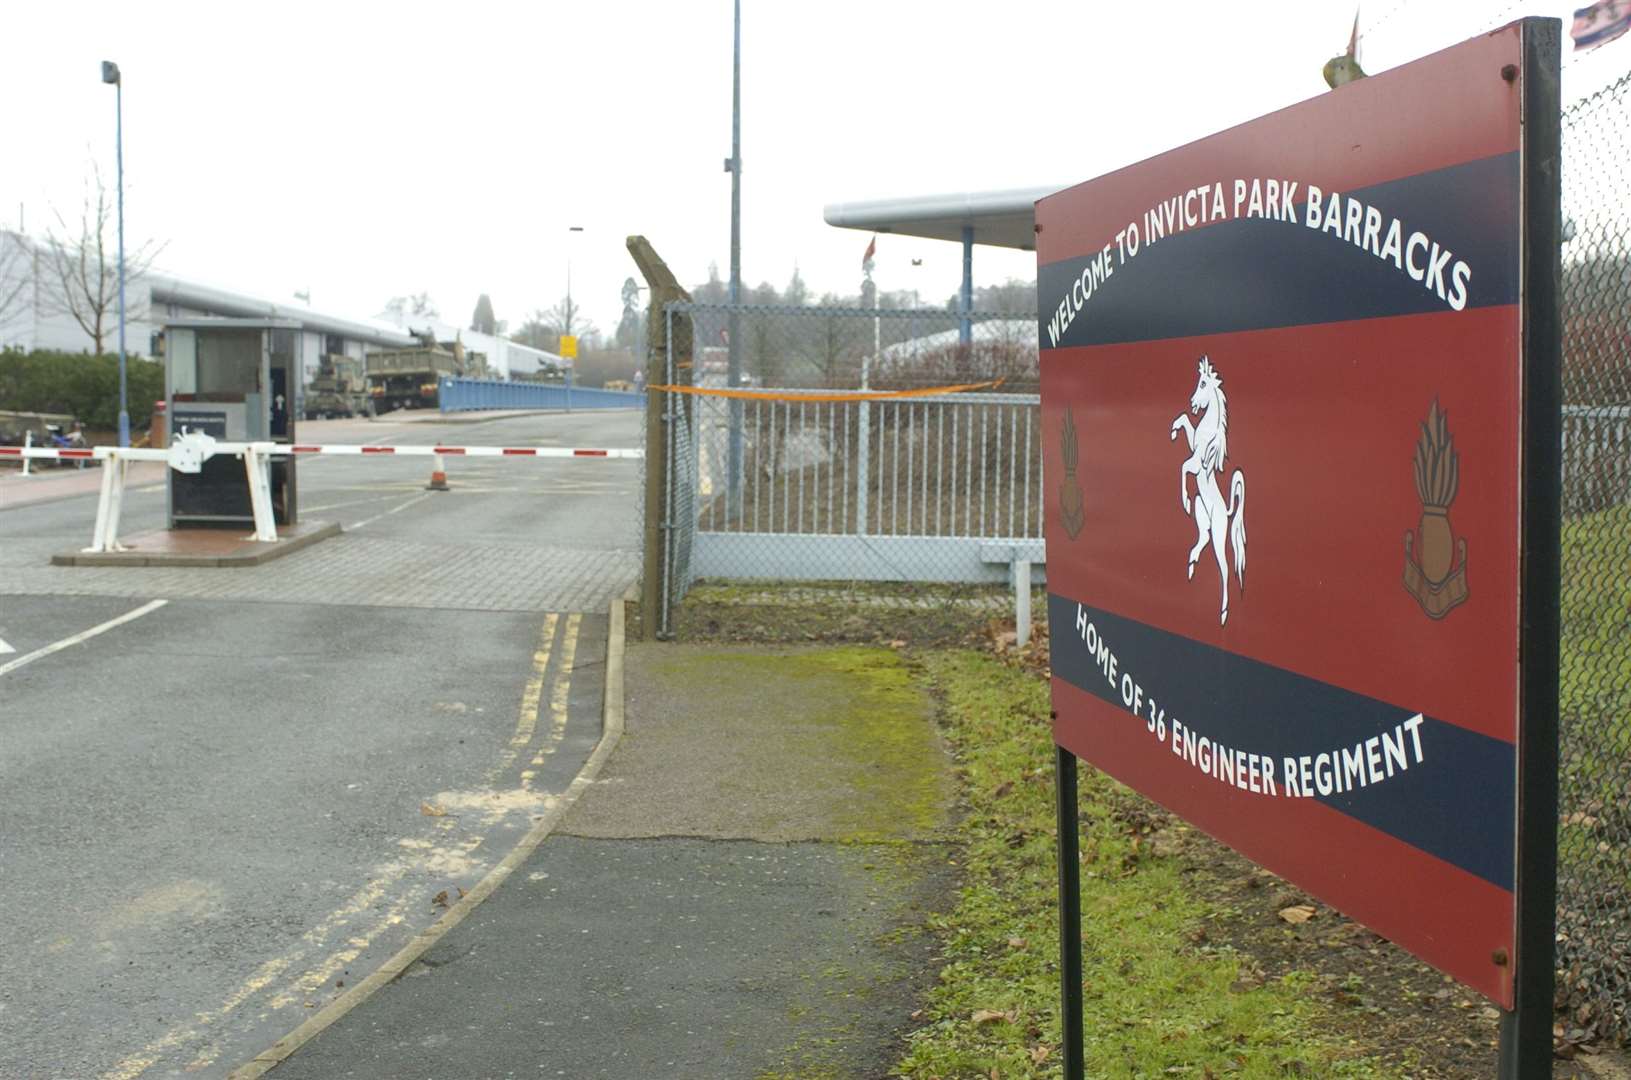 The future of Invicta Park Barracks in Maidstone is uncertain